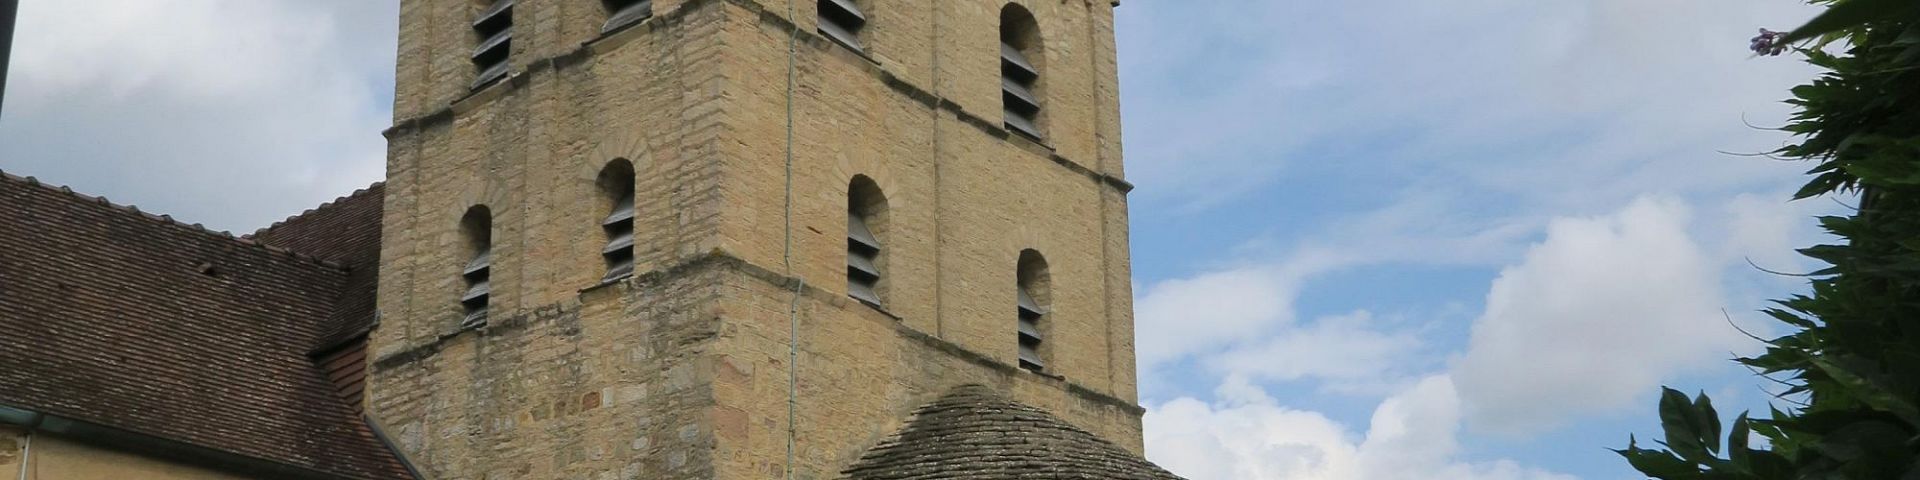 Bligny-lès-Beaune - Eglise Saint-Baldoux (21)